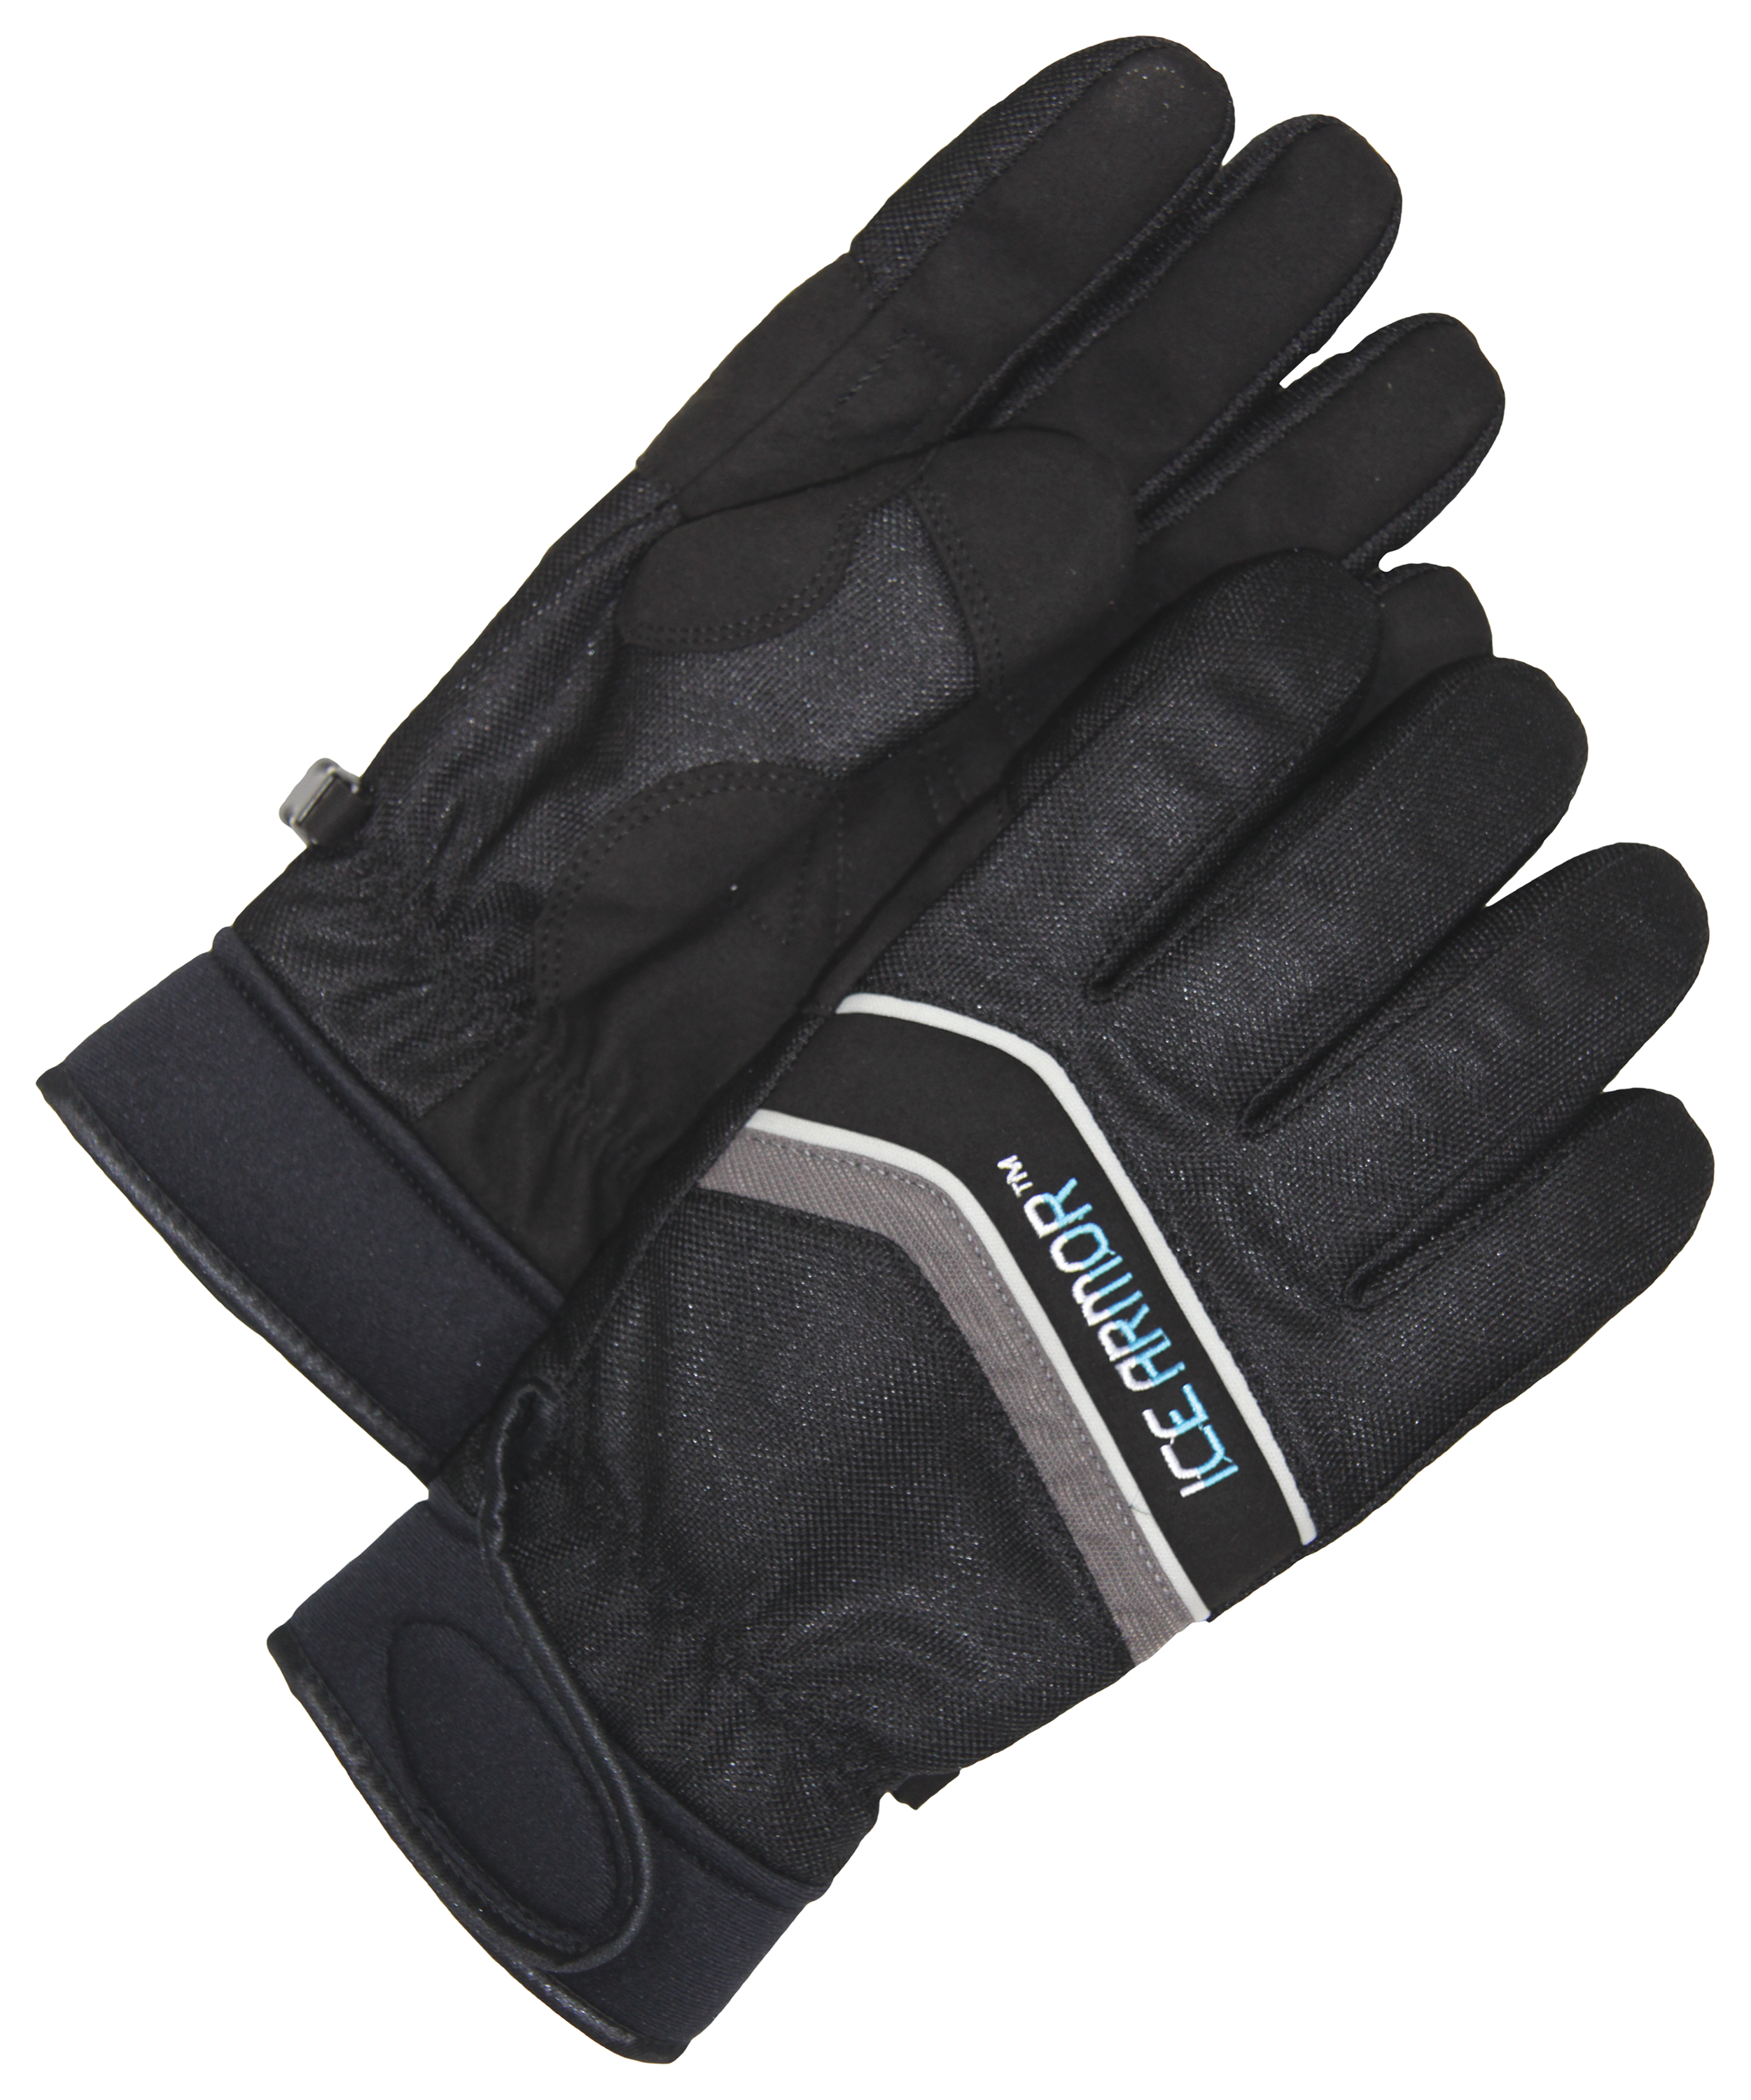 IceArmor by Clam Edge Gloves for Men